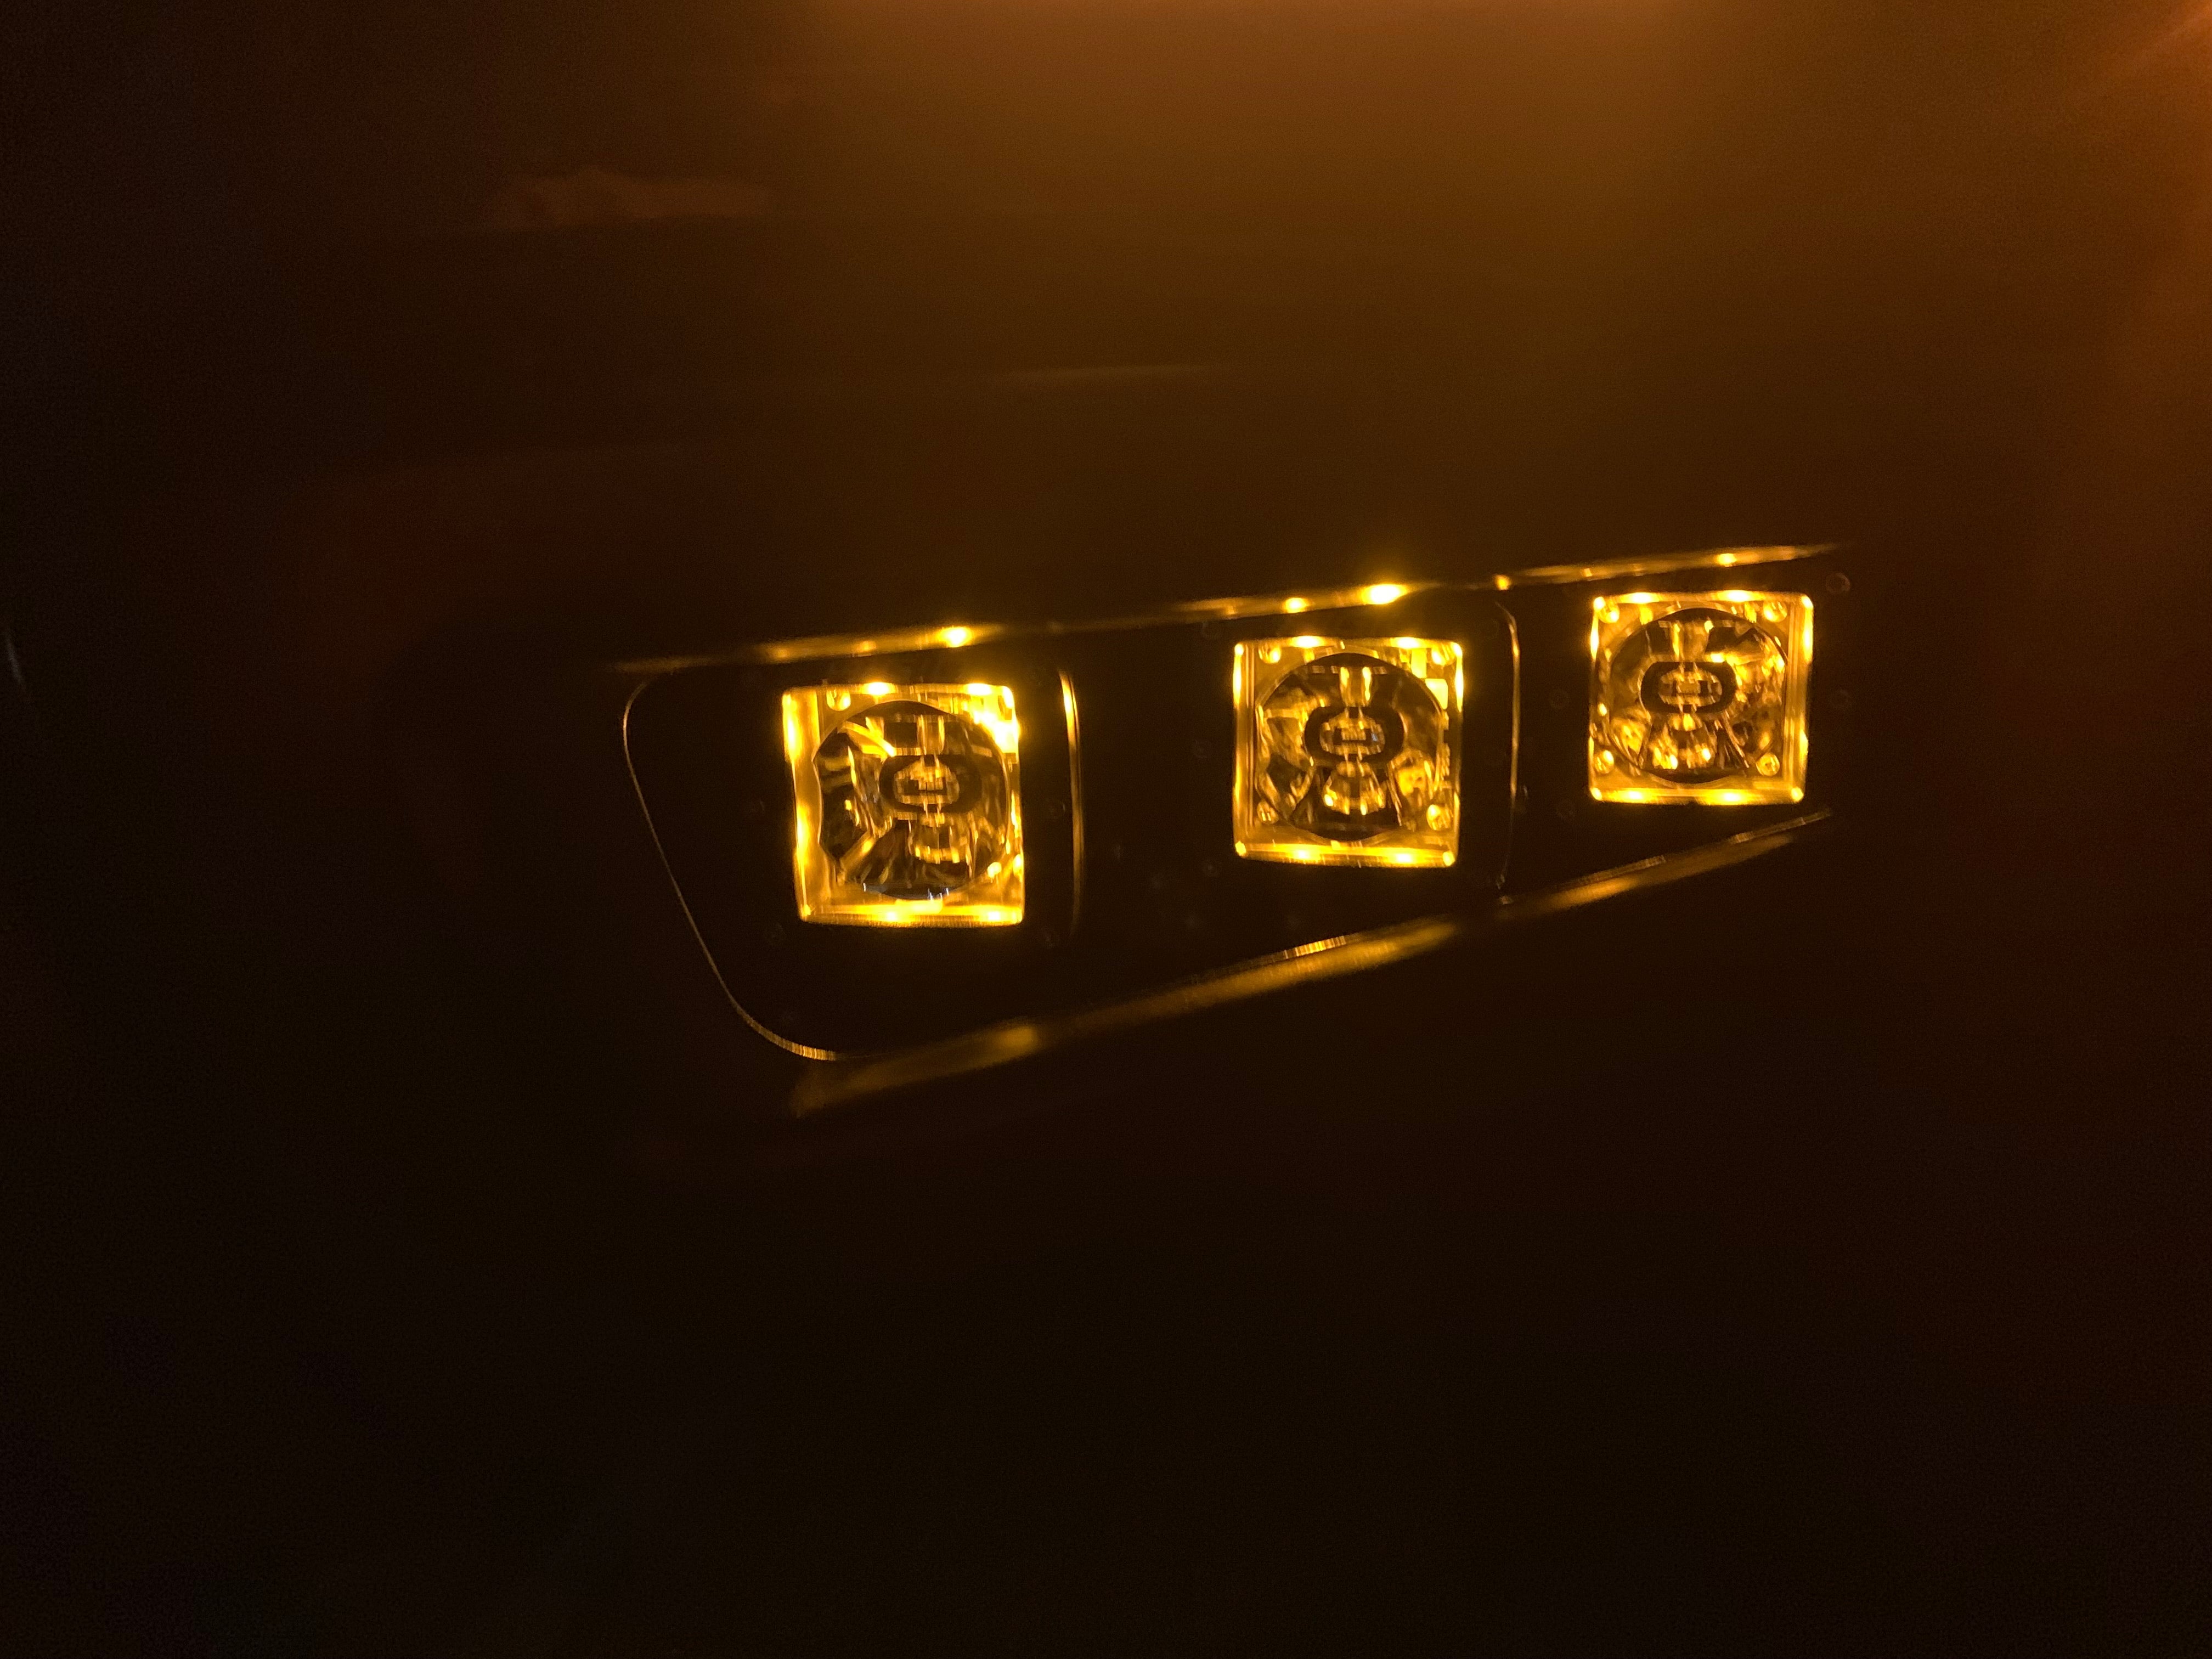 Special Buy - 2017-2020 Ford F-150 Raptor - Rigid Radiance Fog Amber LED Triple Fog Light Kit With Brackets/Harness (20204)